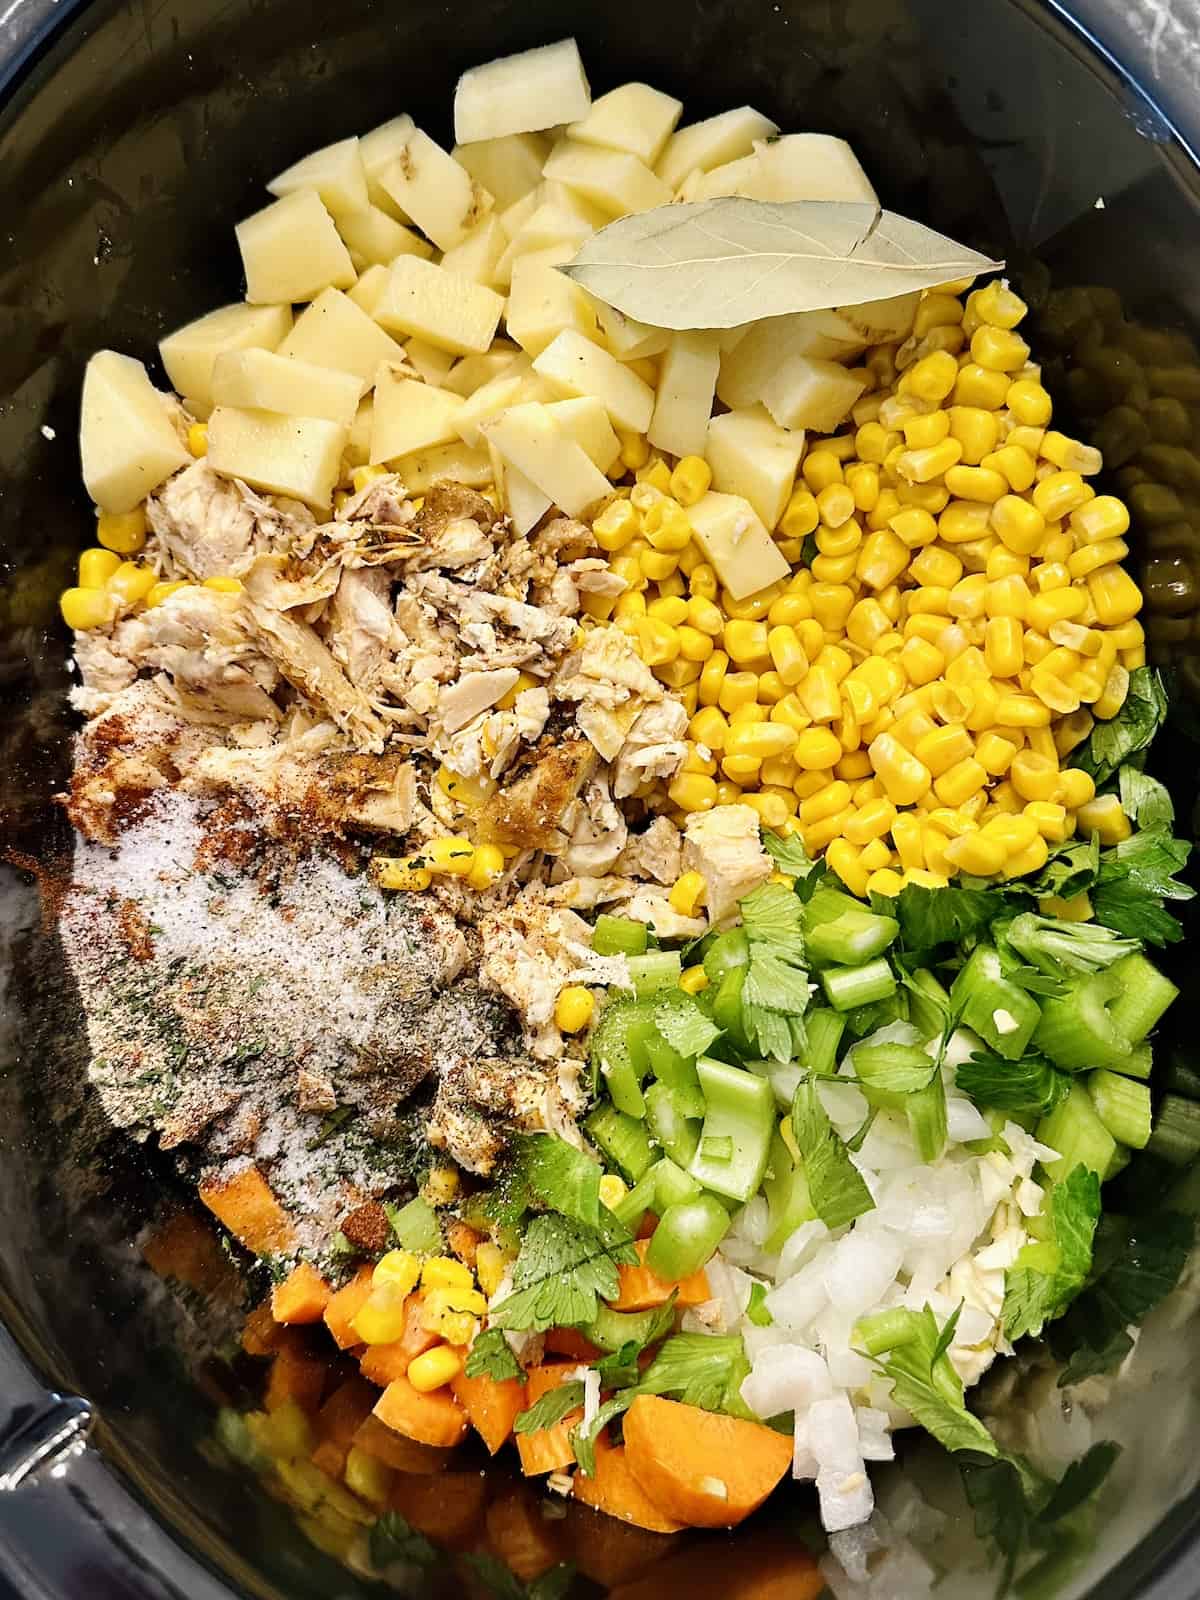 corn, chicken, vegetables, broth and seasonings in a crock pot.